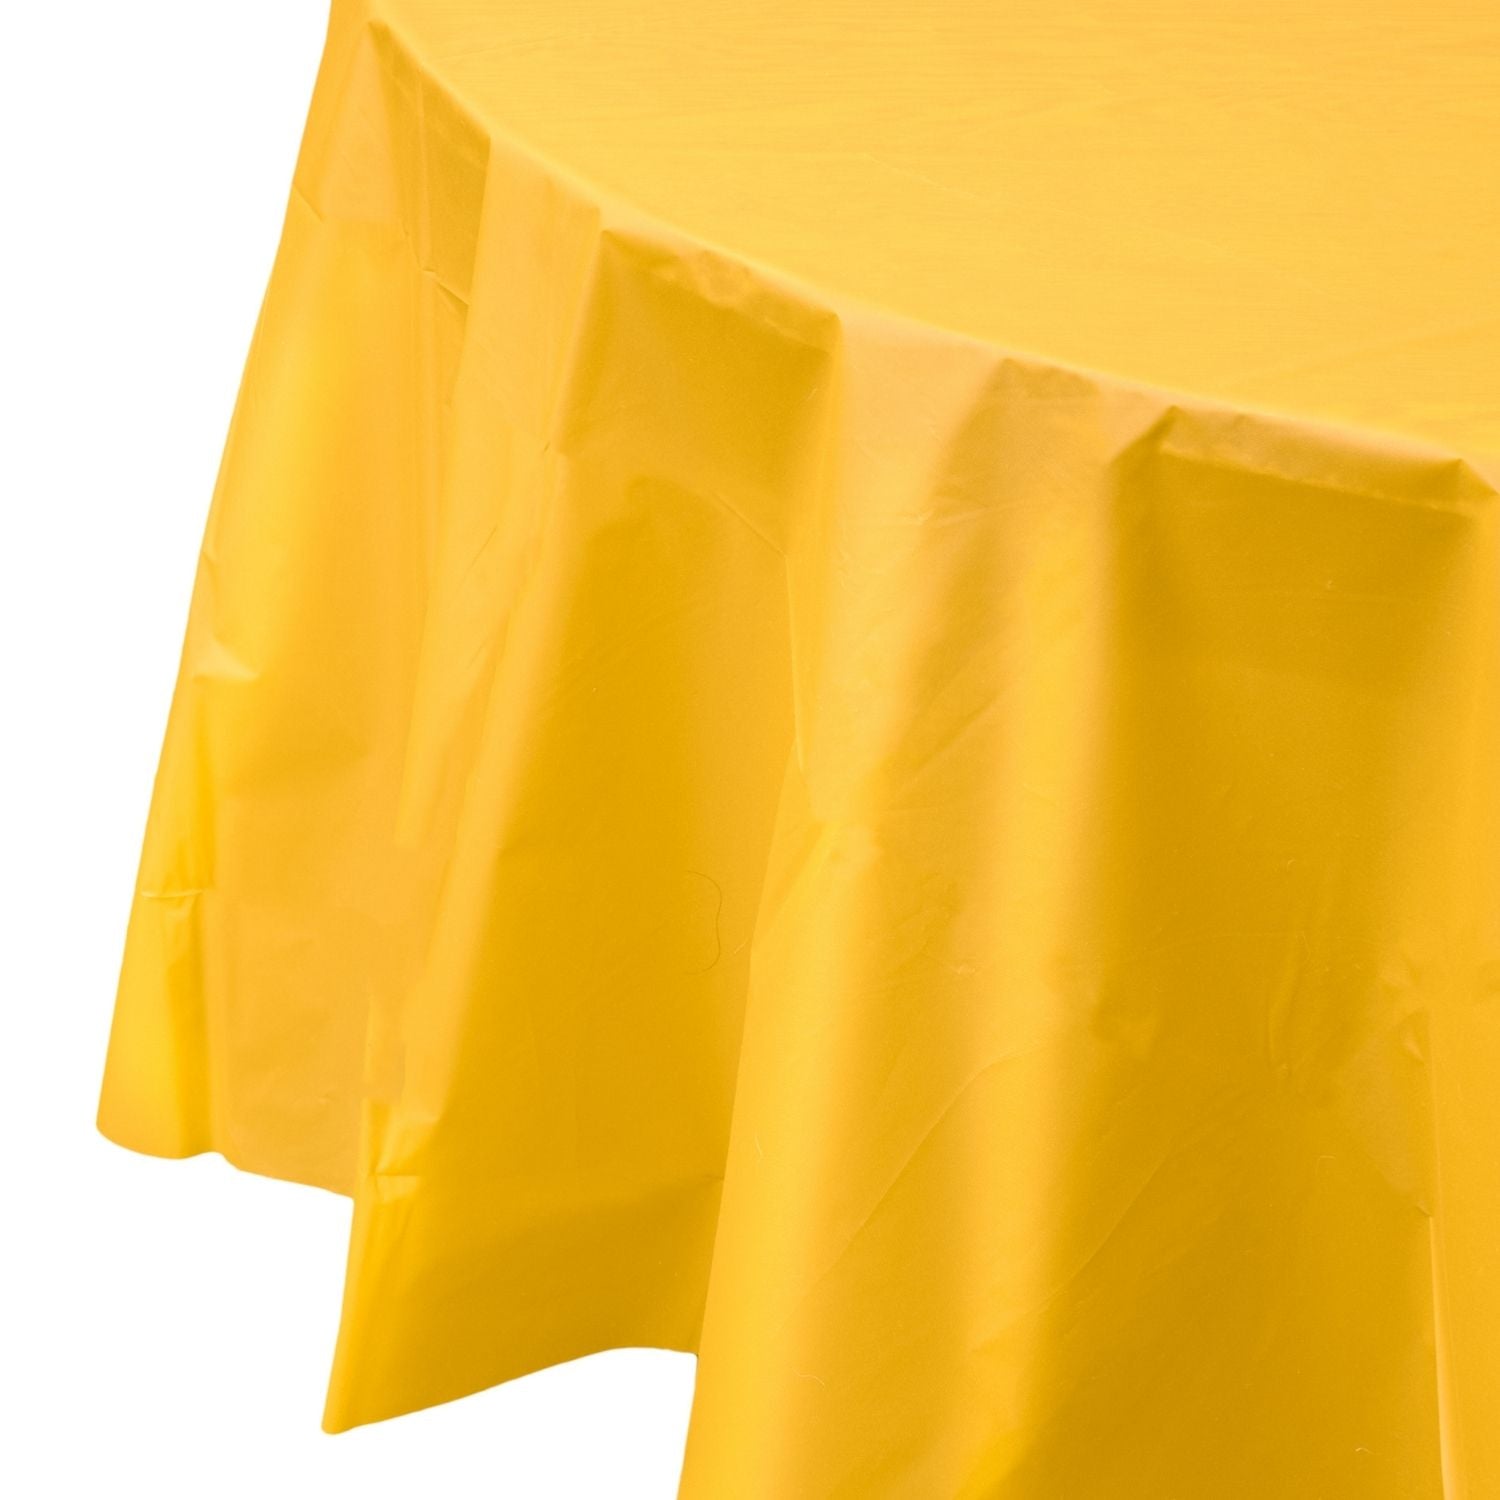 Premium Round Yellow Plastic Tablecloth | 96 Count - Yom Tov Settings